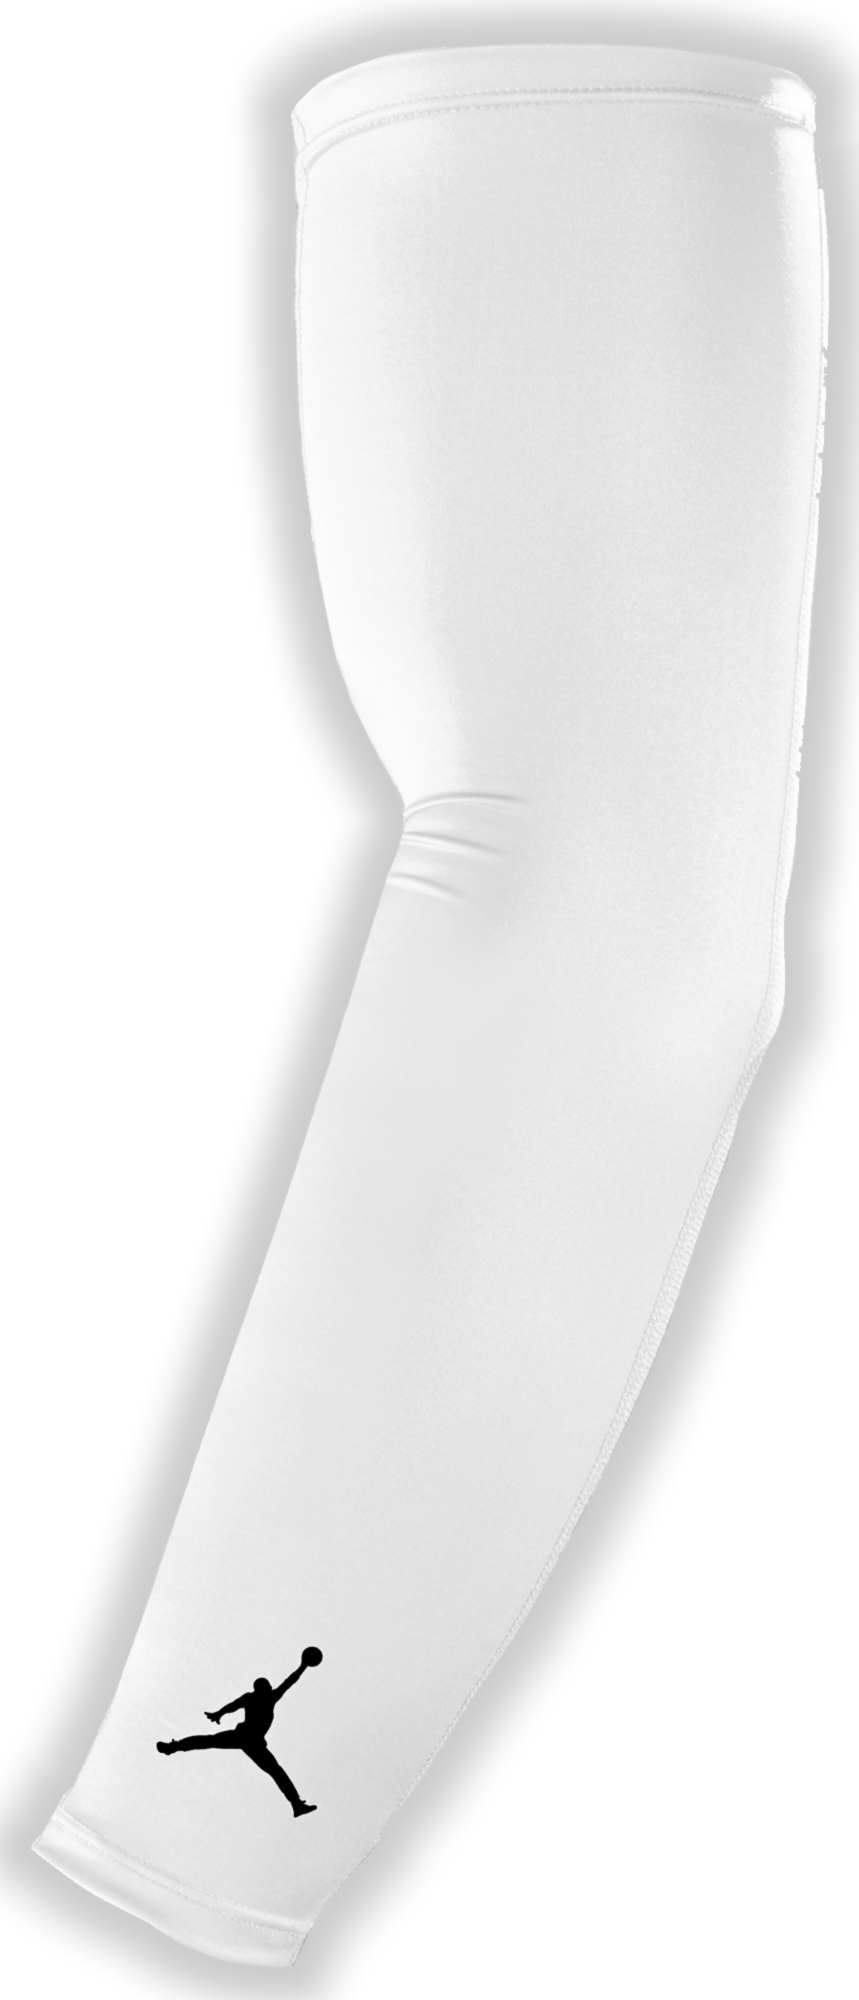 Nike Jordan Shooter Sleeves - White/Black